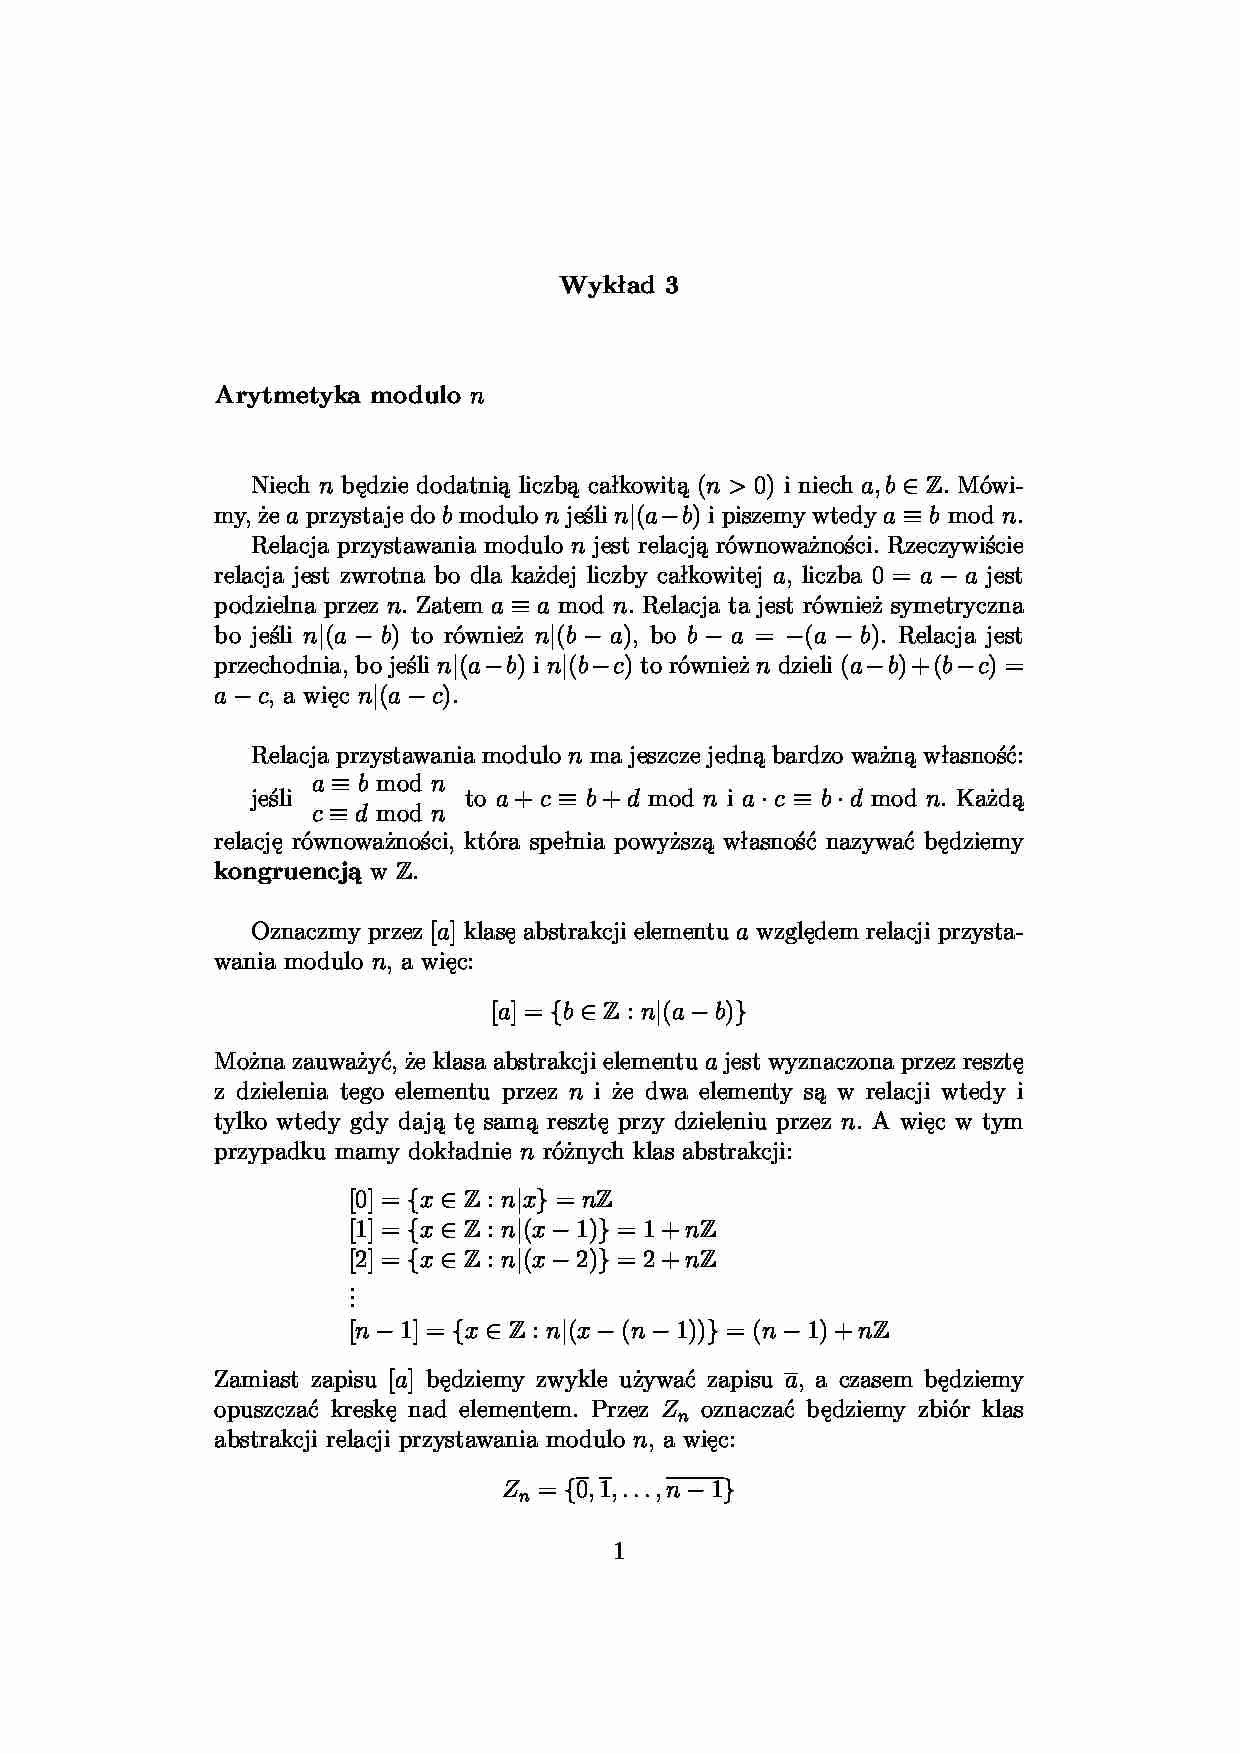 Arytmetyka modulowa algebra - strona 1